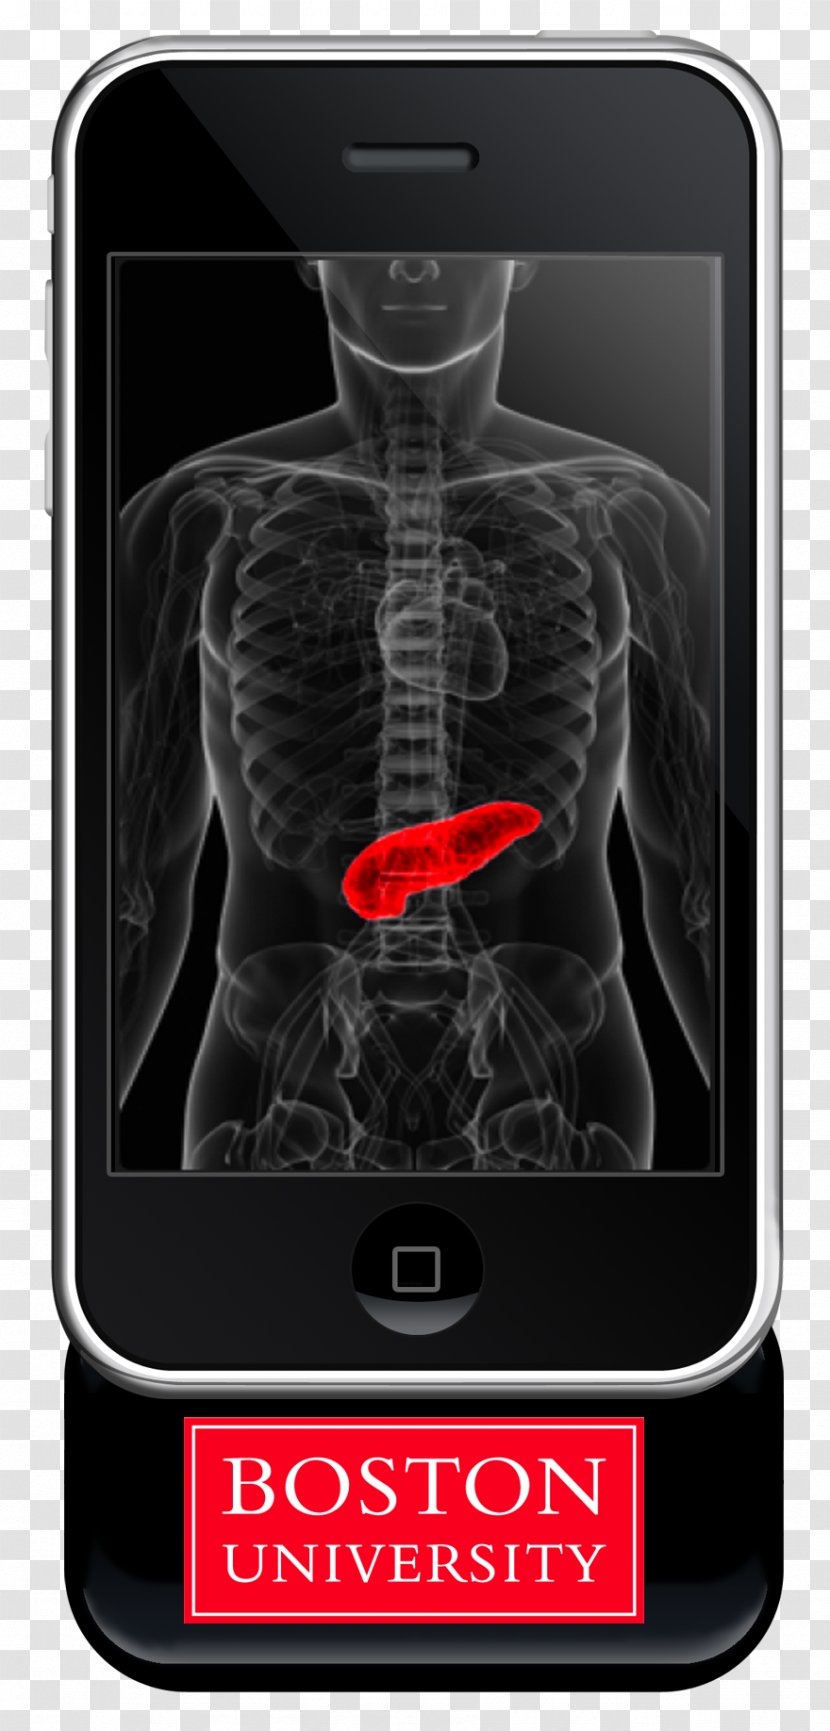 Diabetes Mellitus Kidney Failure Pancreas Insulin - Health Transparent PNG